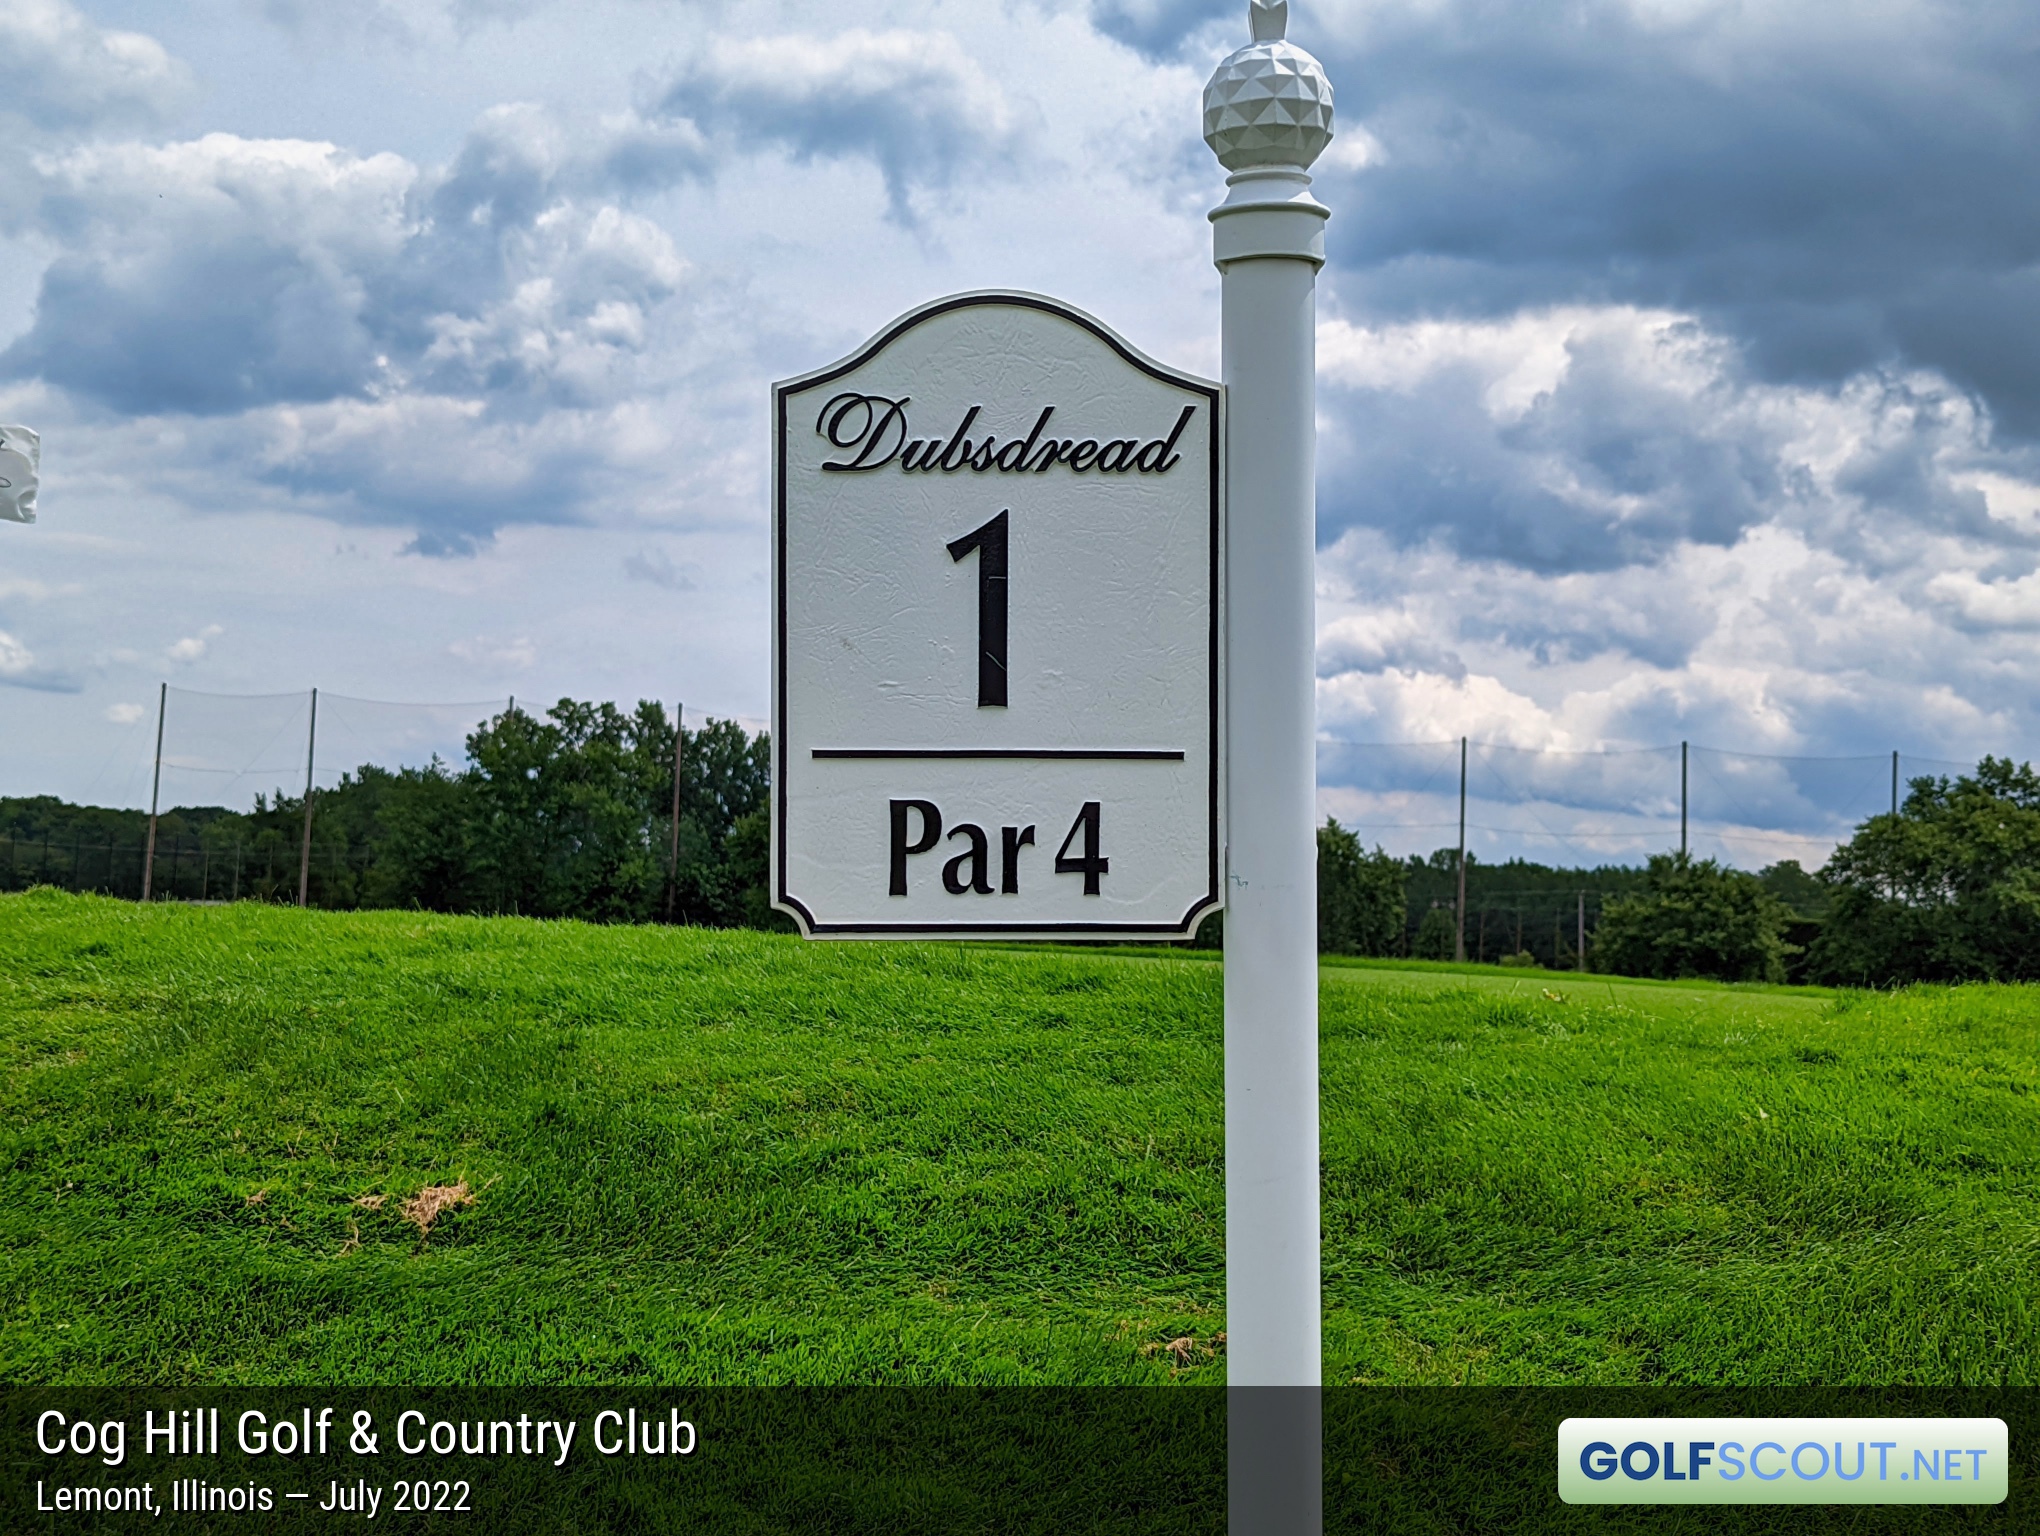 Miscellaneous photo of Cog Hill Course #4 - Dubsdread in Lemont, Illinois. Dubs hole #1 signage.